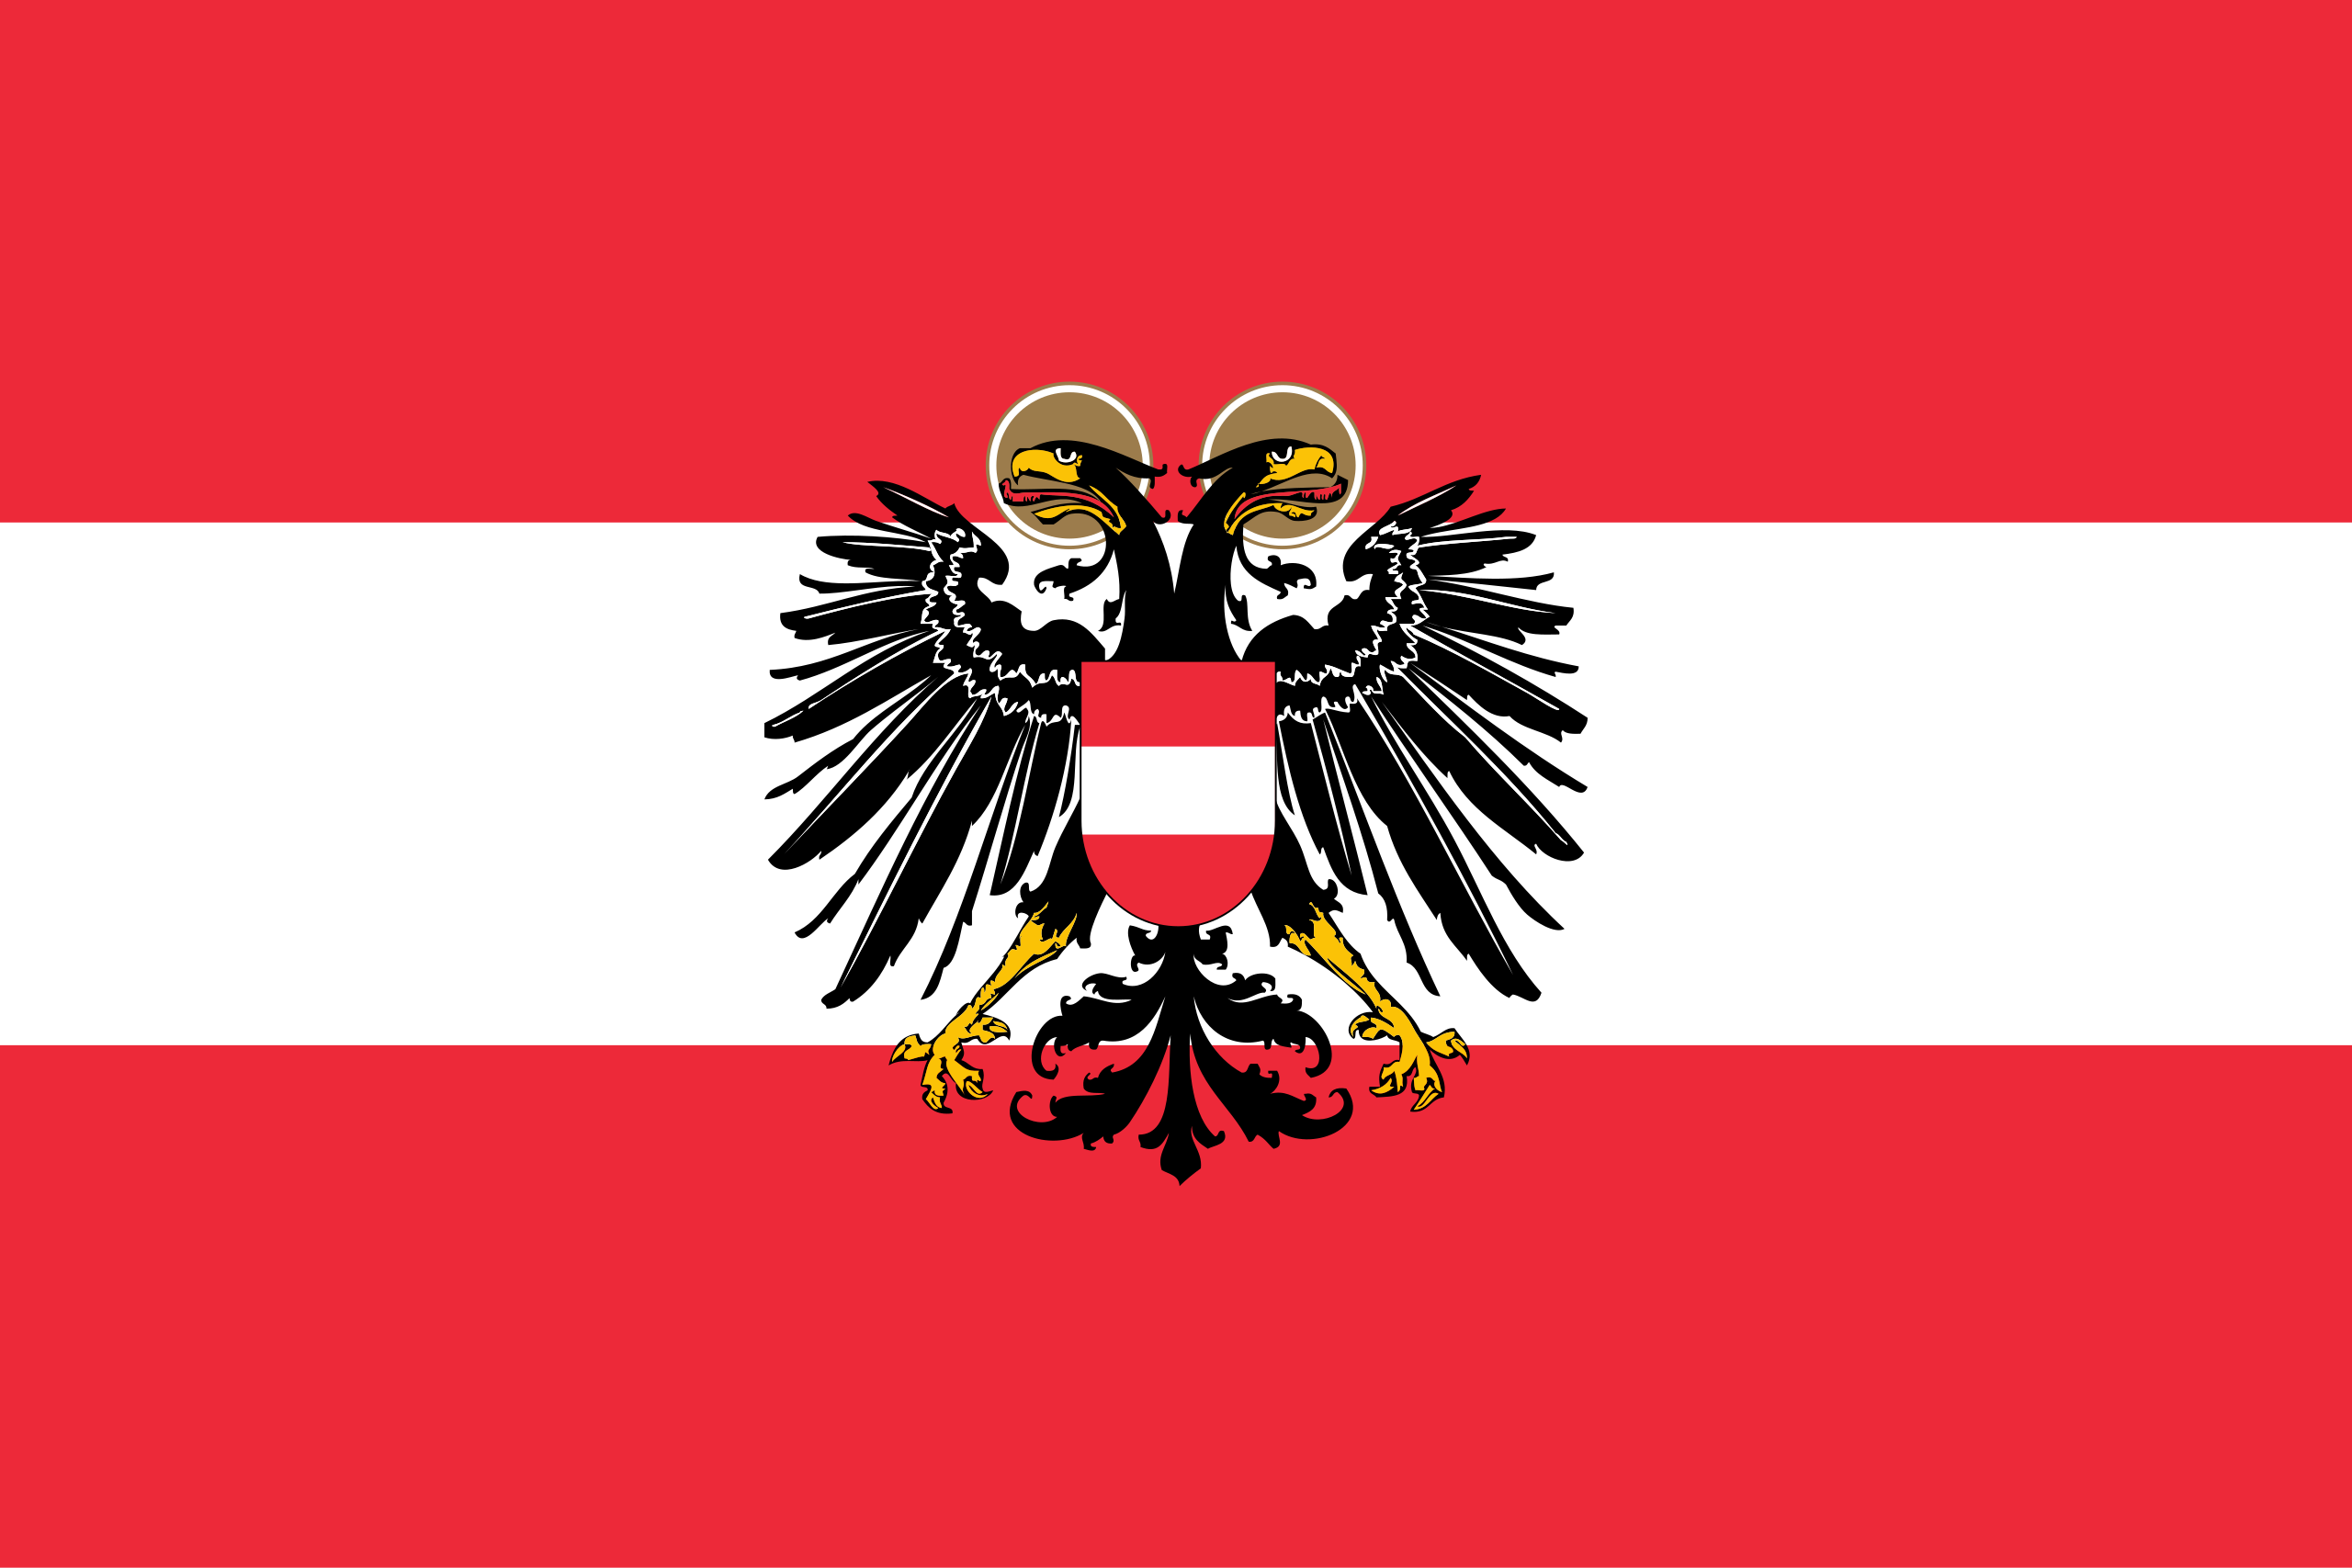 https://upload.wikimedia.org/wikipedia/commons/thumb/8/8d/State_flag_of_Austria_%281934%E2%80%931938%29.svg/2560px-State_flag_of_Austria_%281934%E2%80%931938%29.svg.png